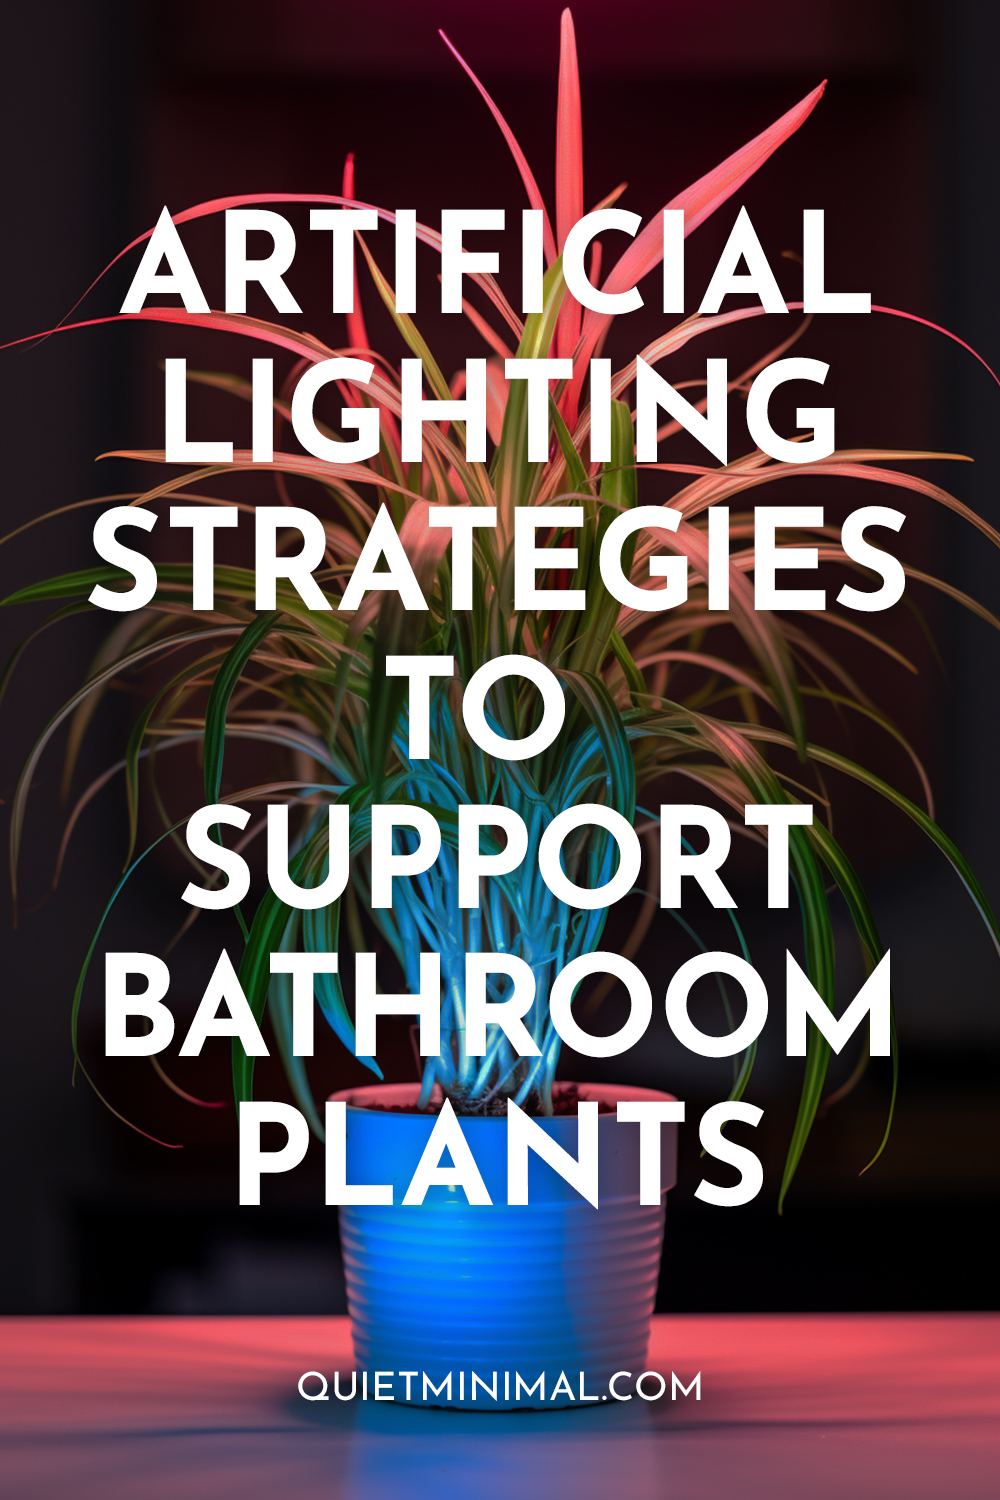 Artificial lighting for bathroom plants.